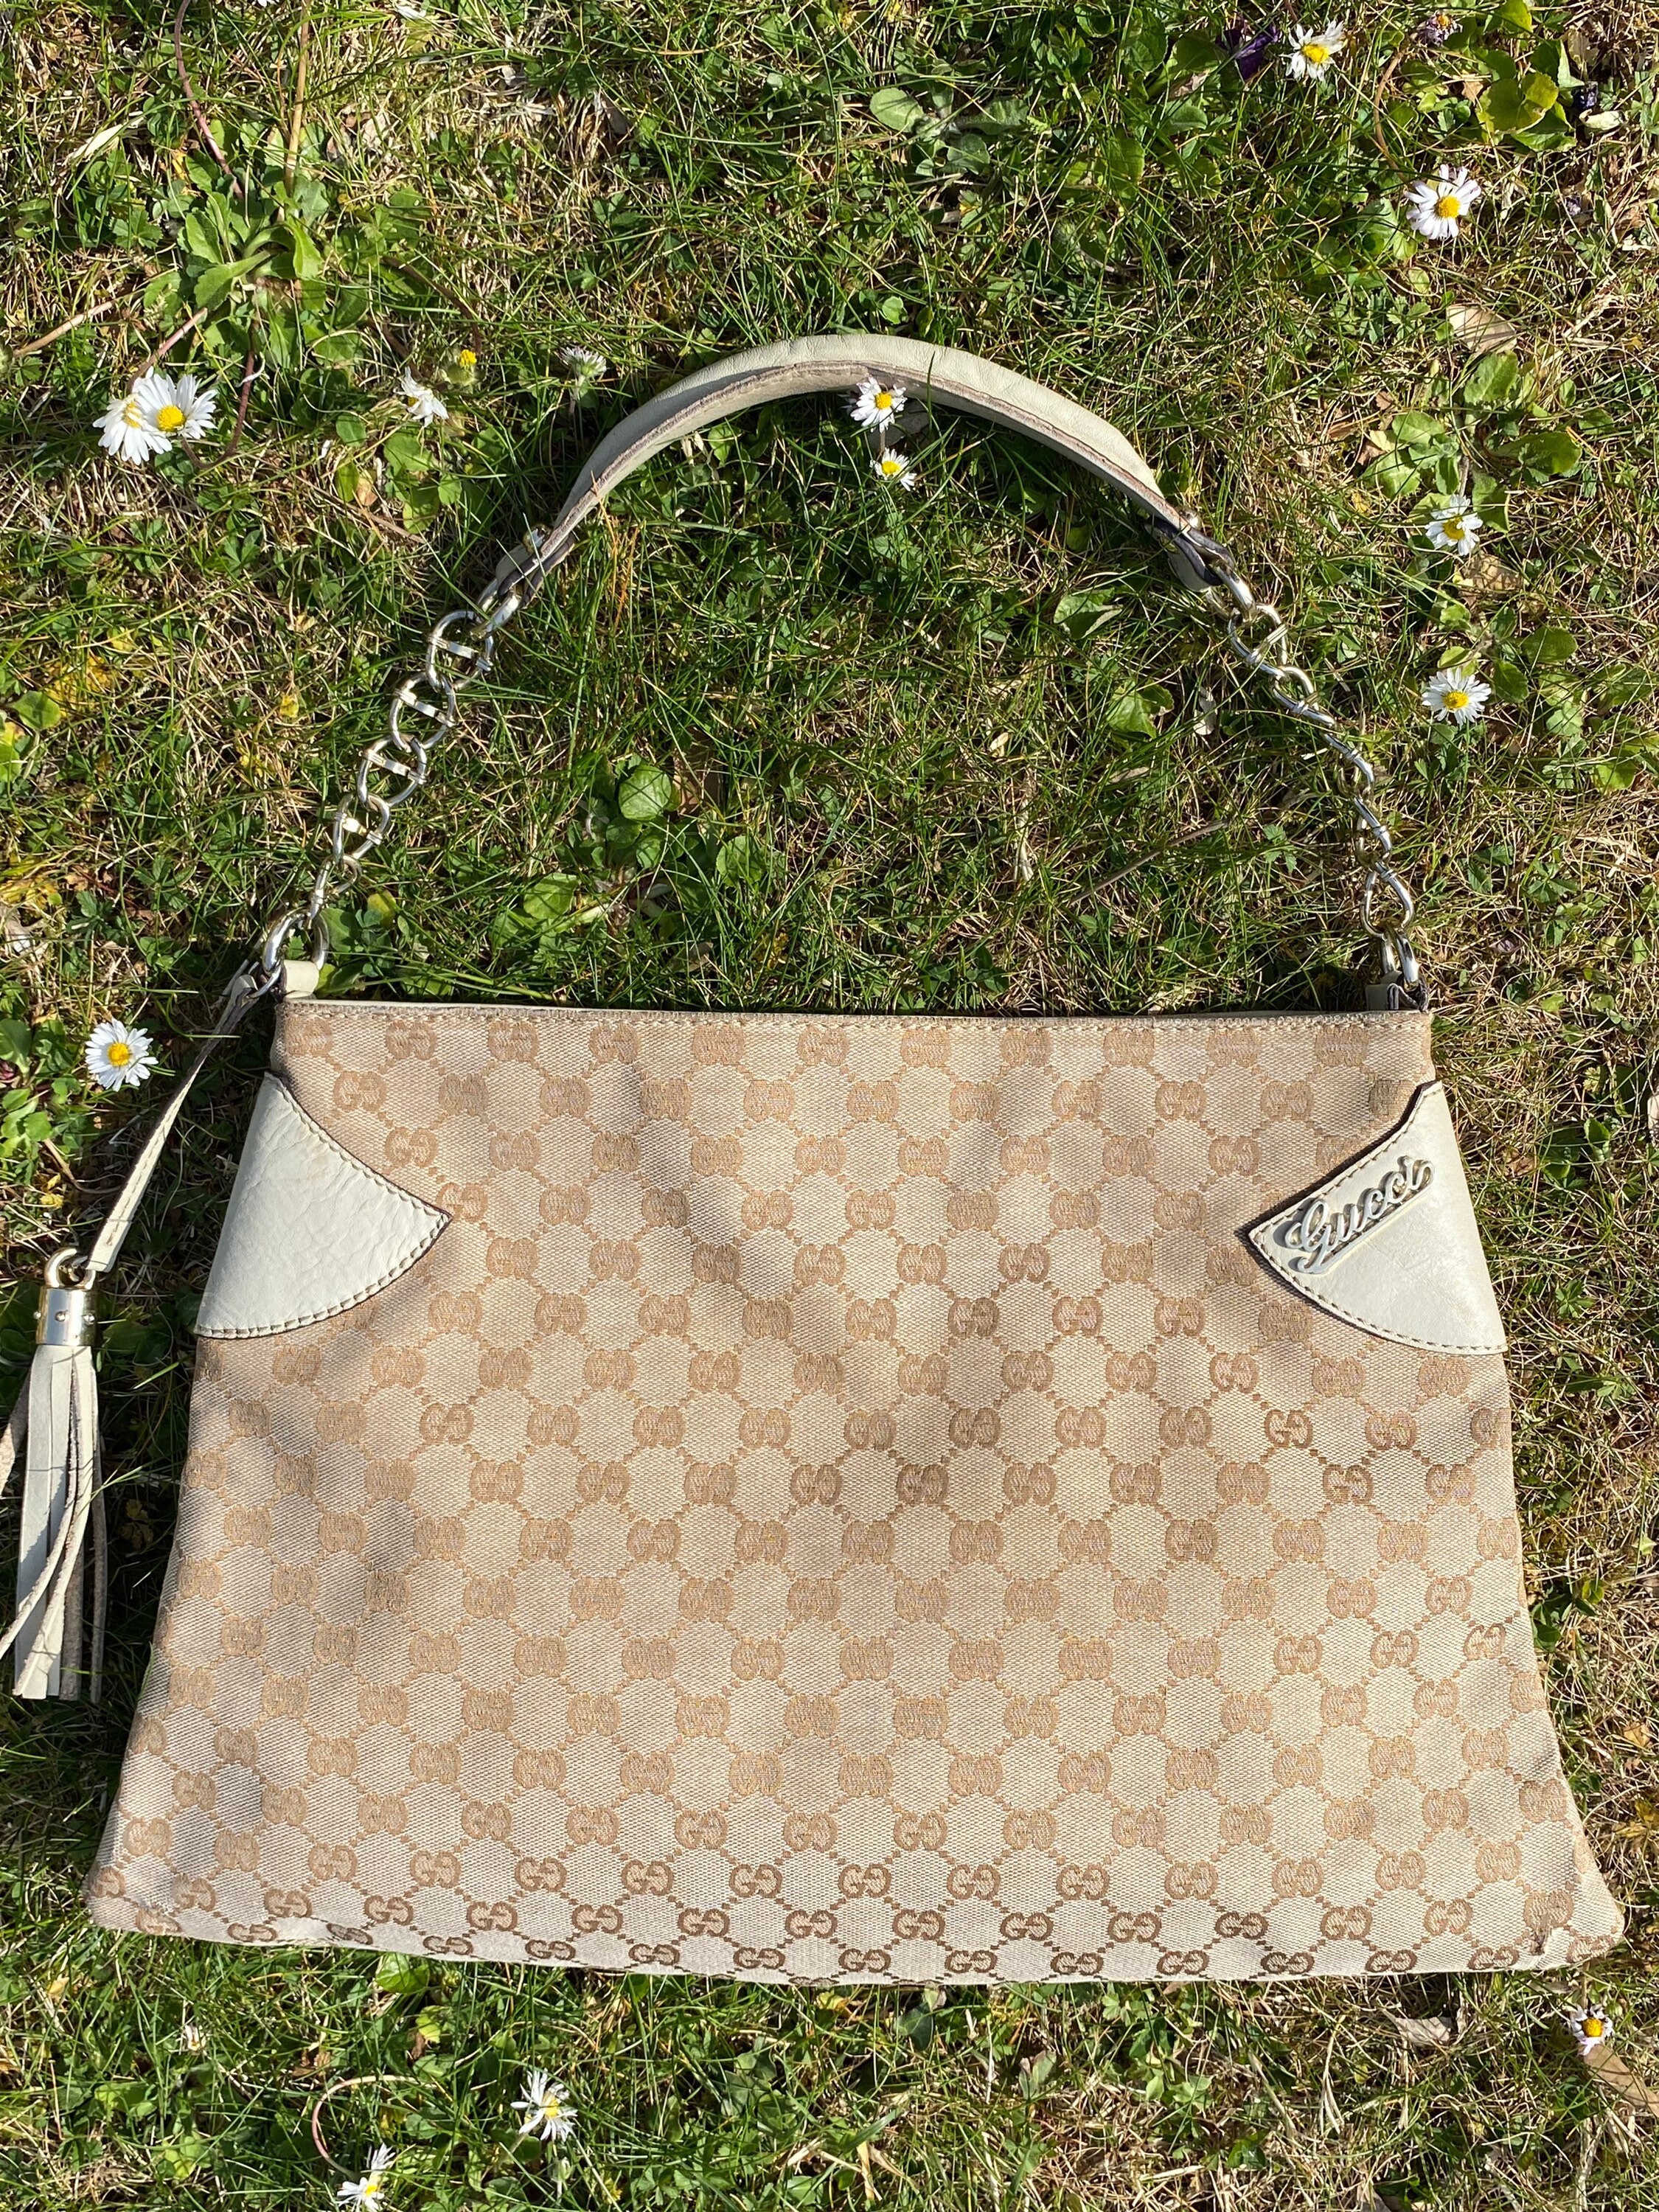 90s Authentic Vintage Bag Gucci/White Beige Bag leather/Gucci Monogram bag/Gucci Design Tote bag/Gucci Monogram Bag